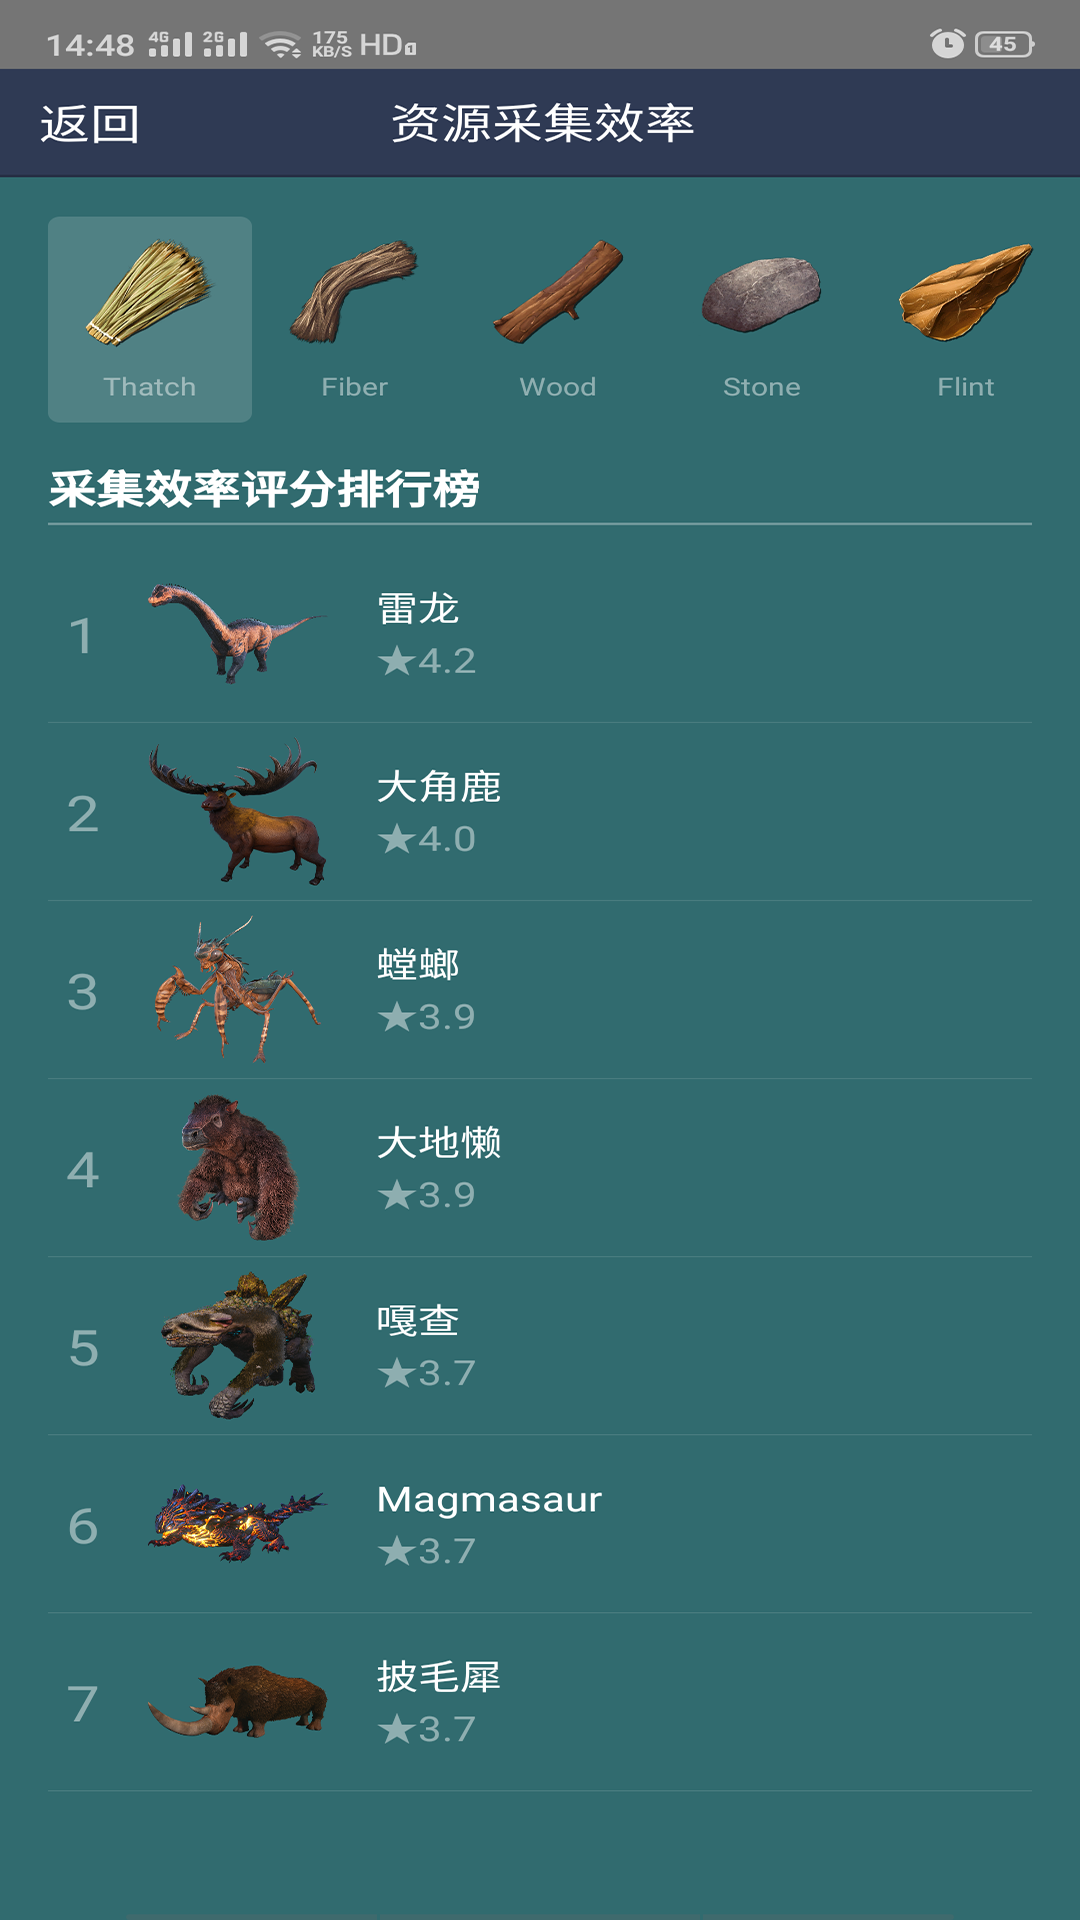 dododex中文版